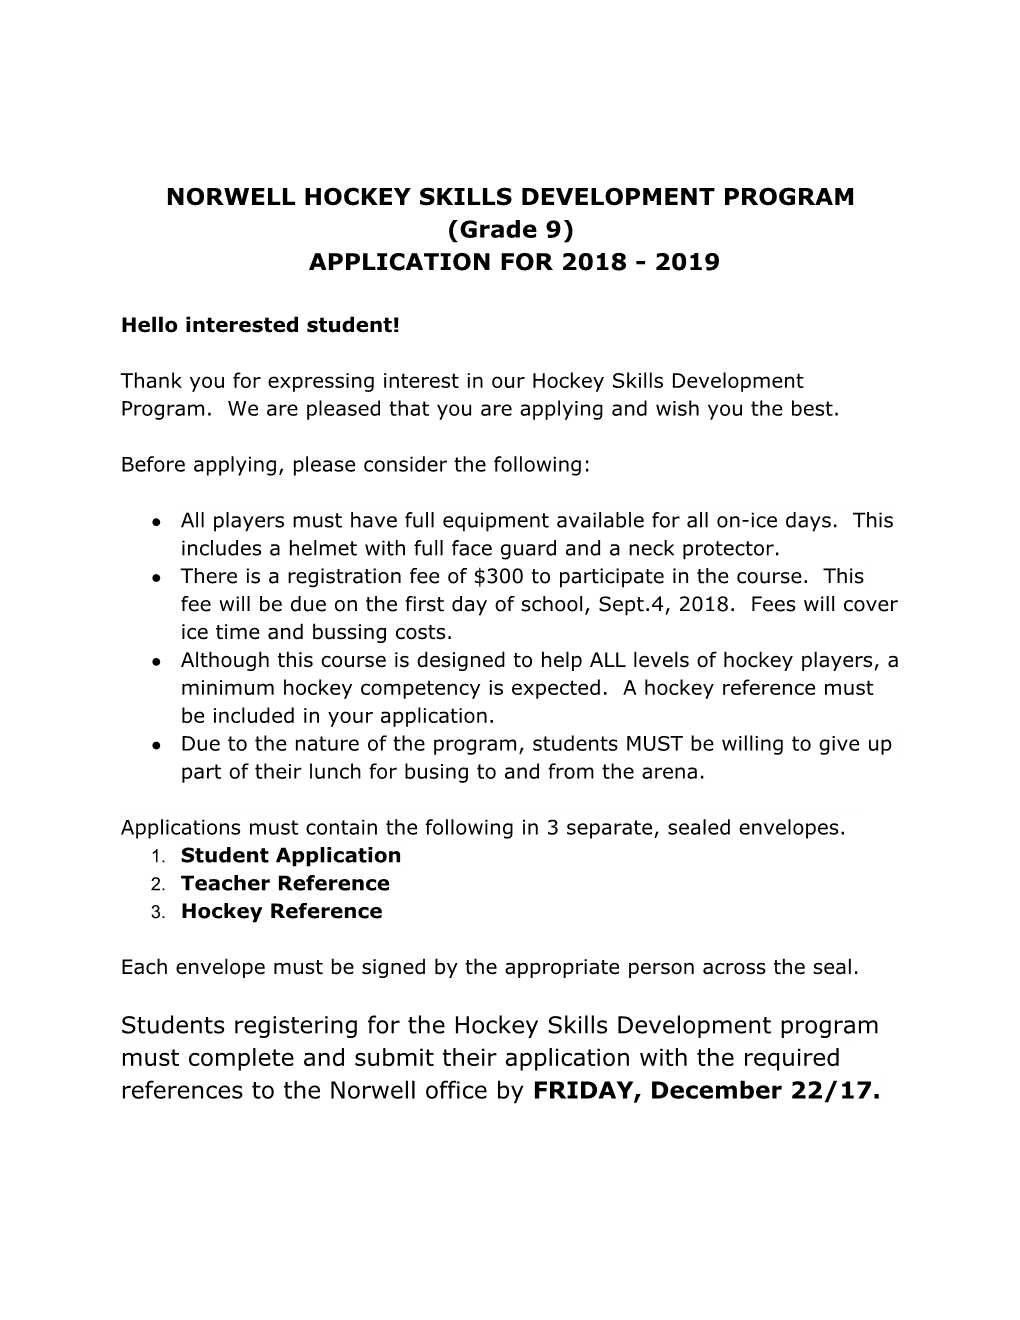 NORWELL HOCKEY SKILLS DEVELOPMENT PROGRAM (Grade 9)